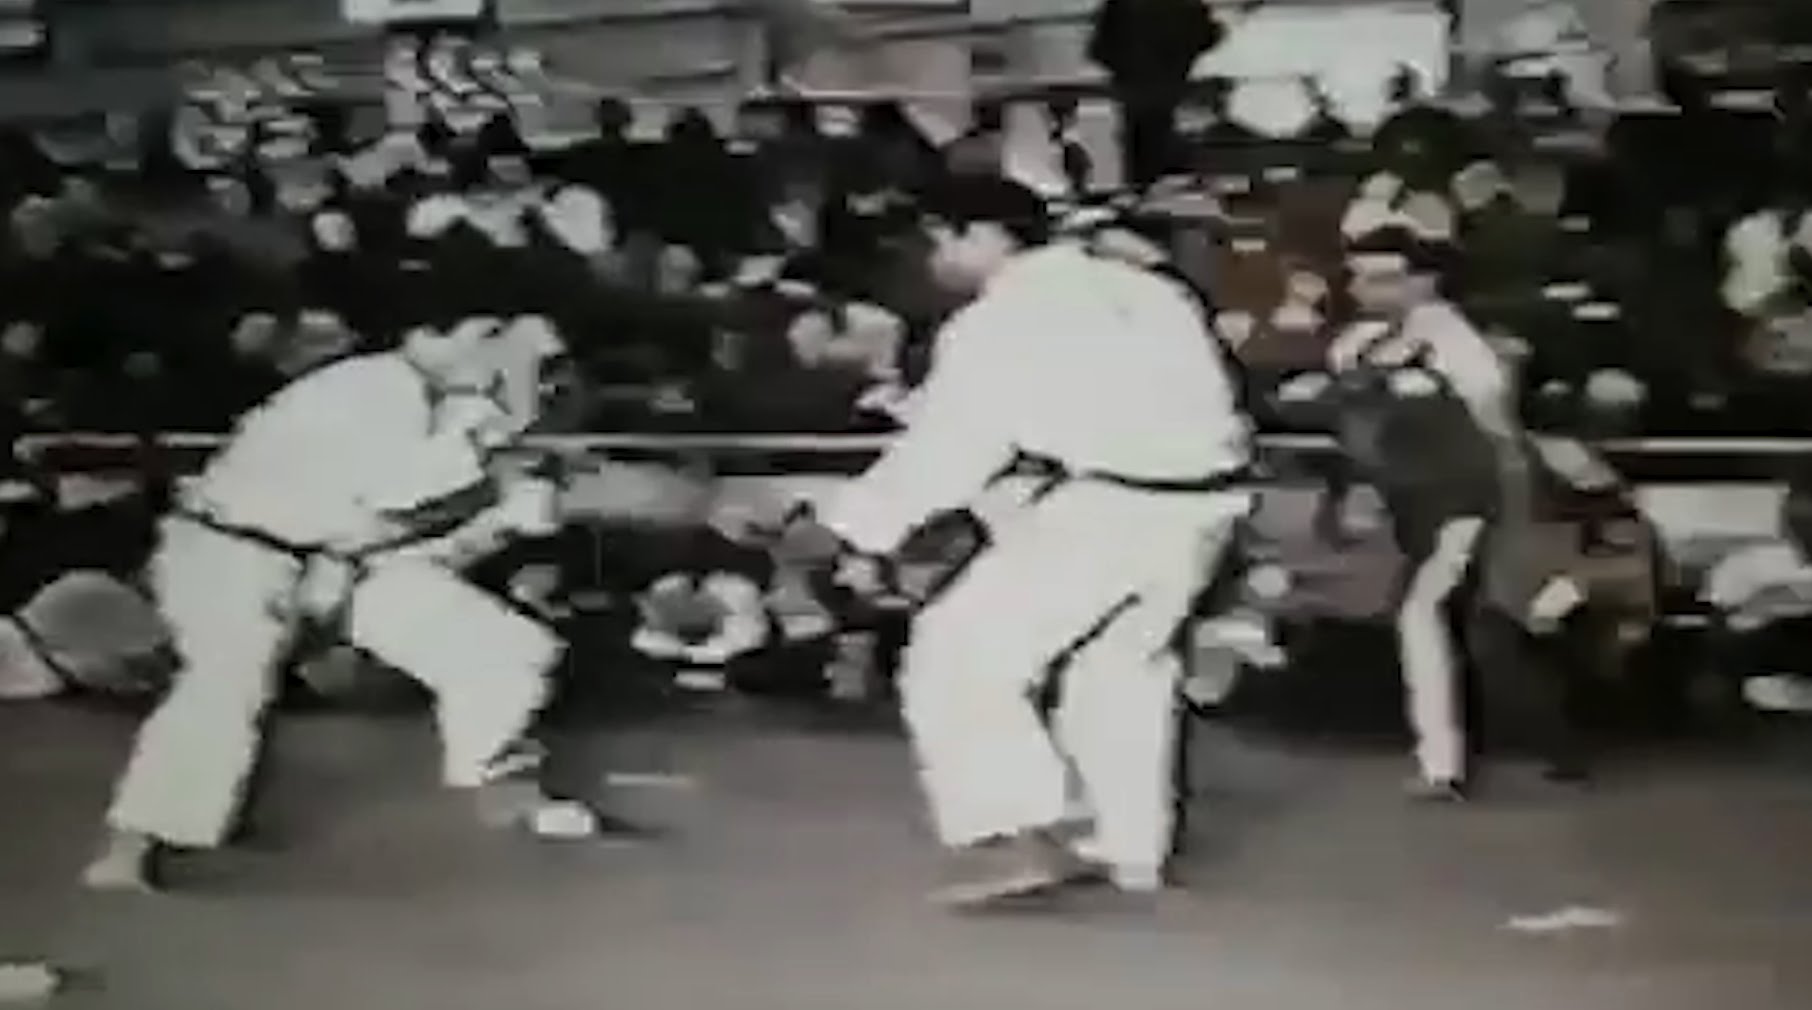 Jiu-Jitsu Video - An historical footage of Rolls and Rickson rolling